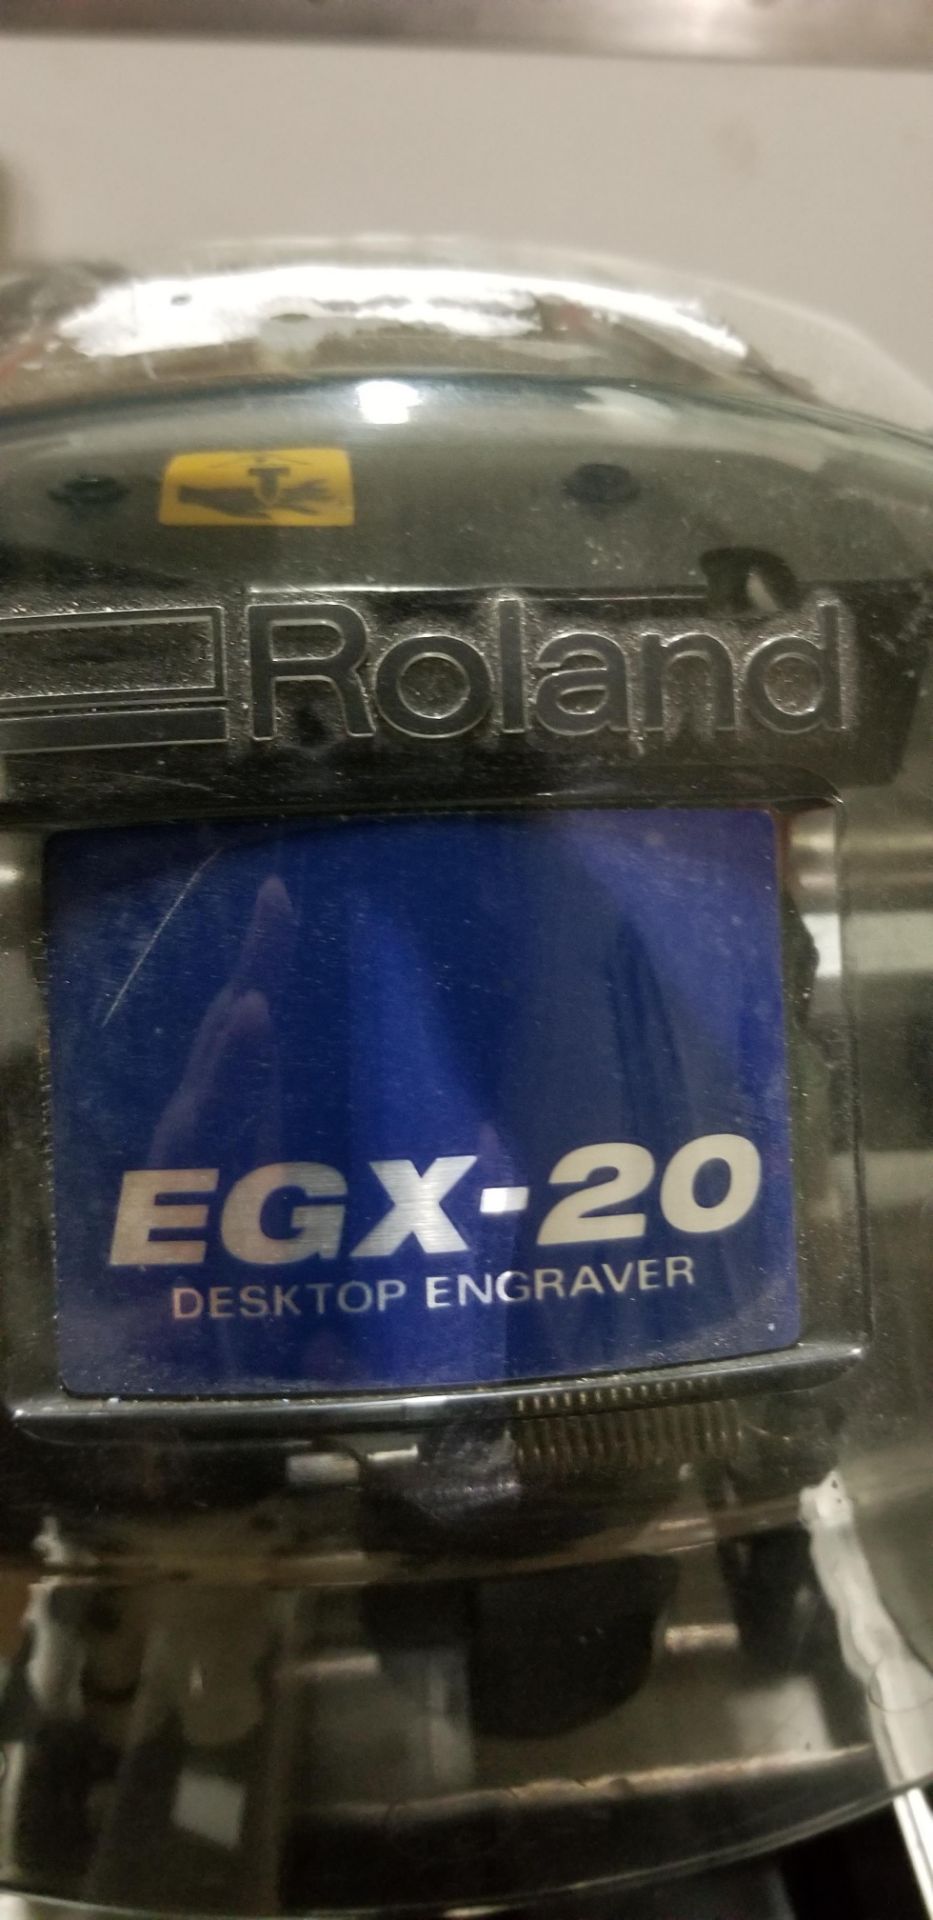 ROLLAND Desktop rotary engraver mod. EGX-20, ser. ZZ04489 - Image 4 of 9